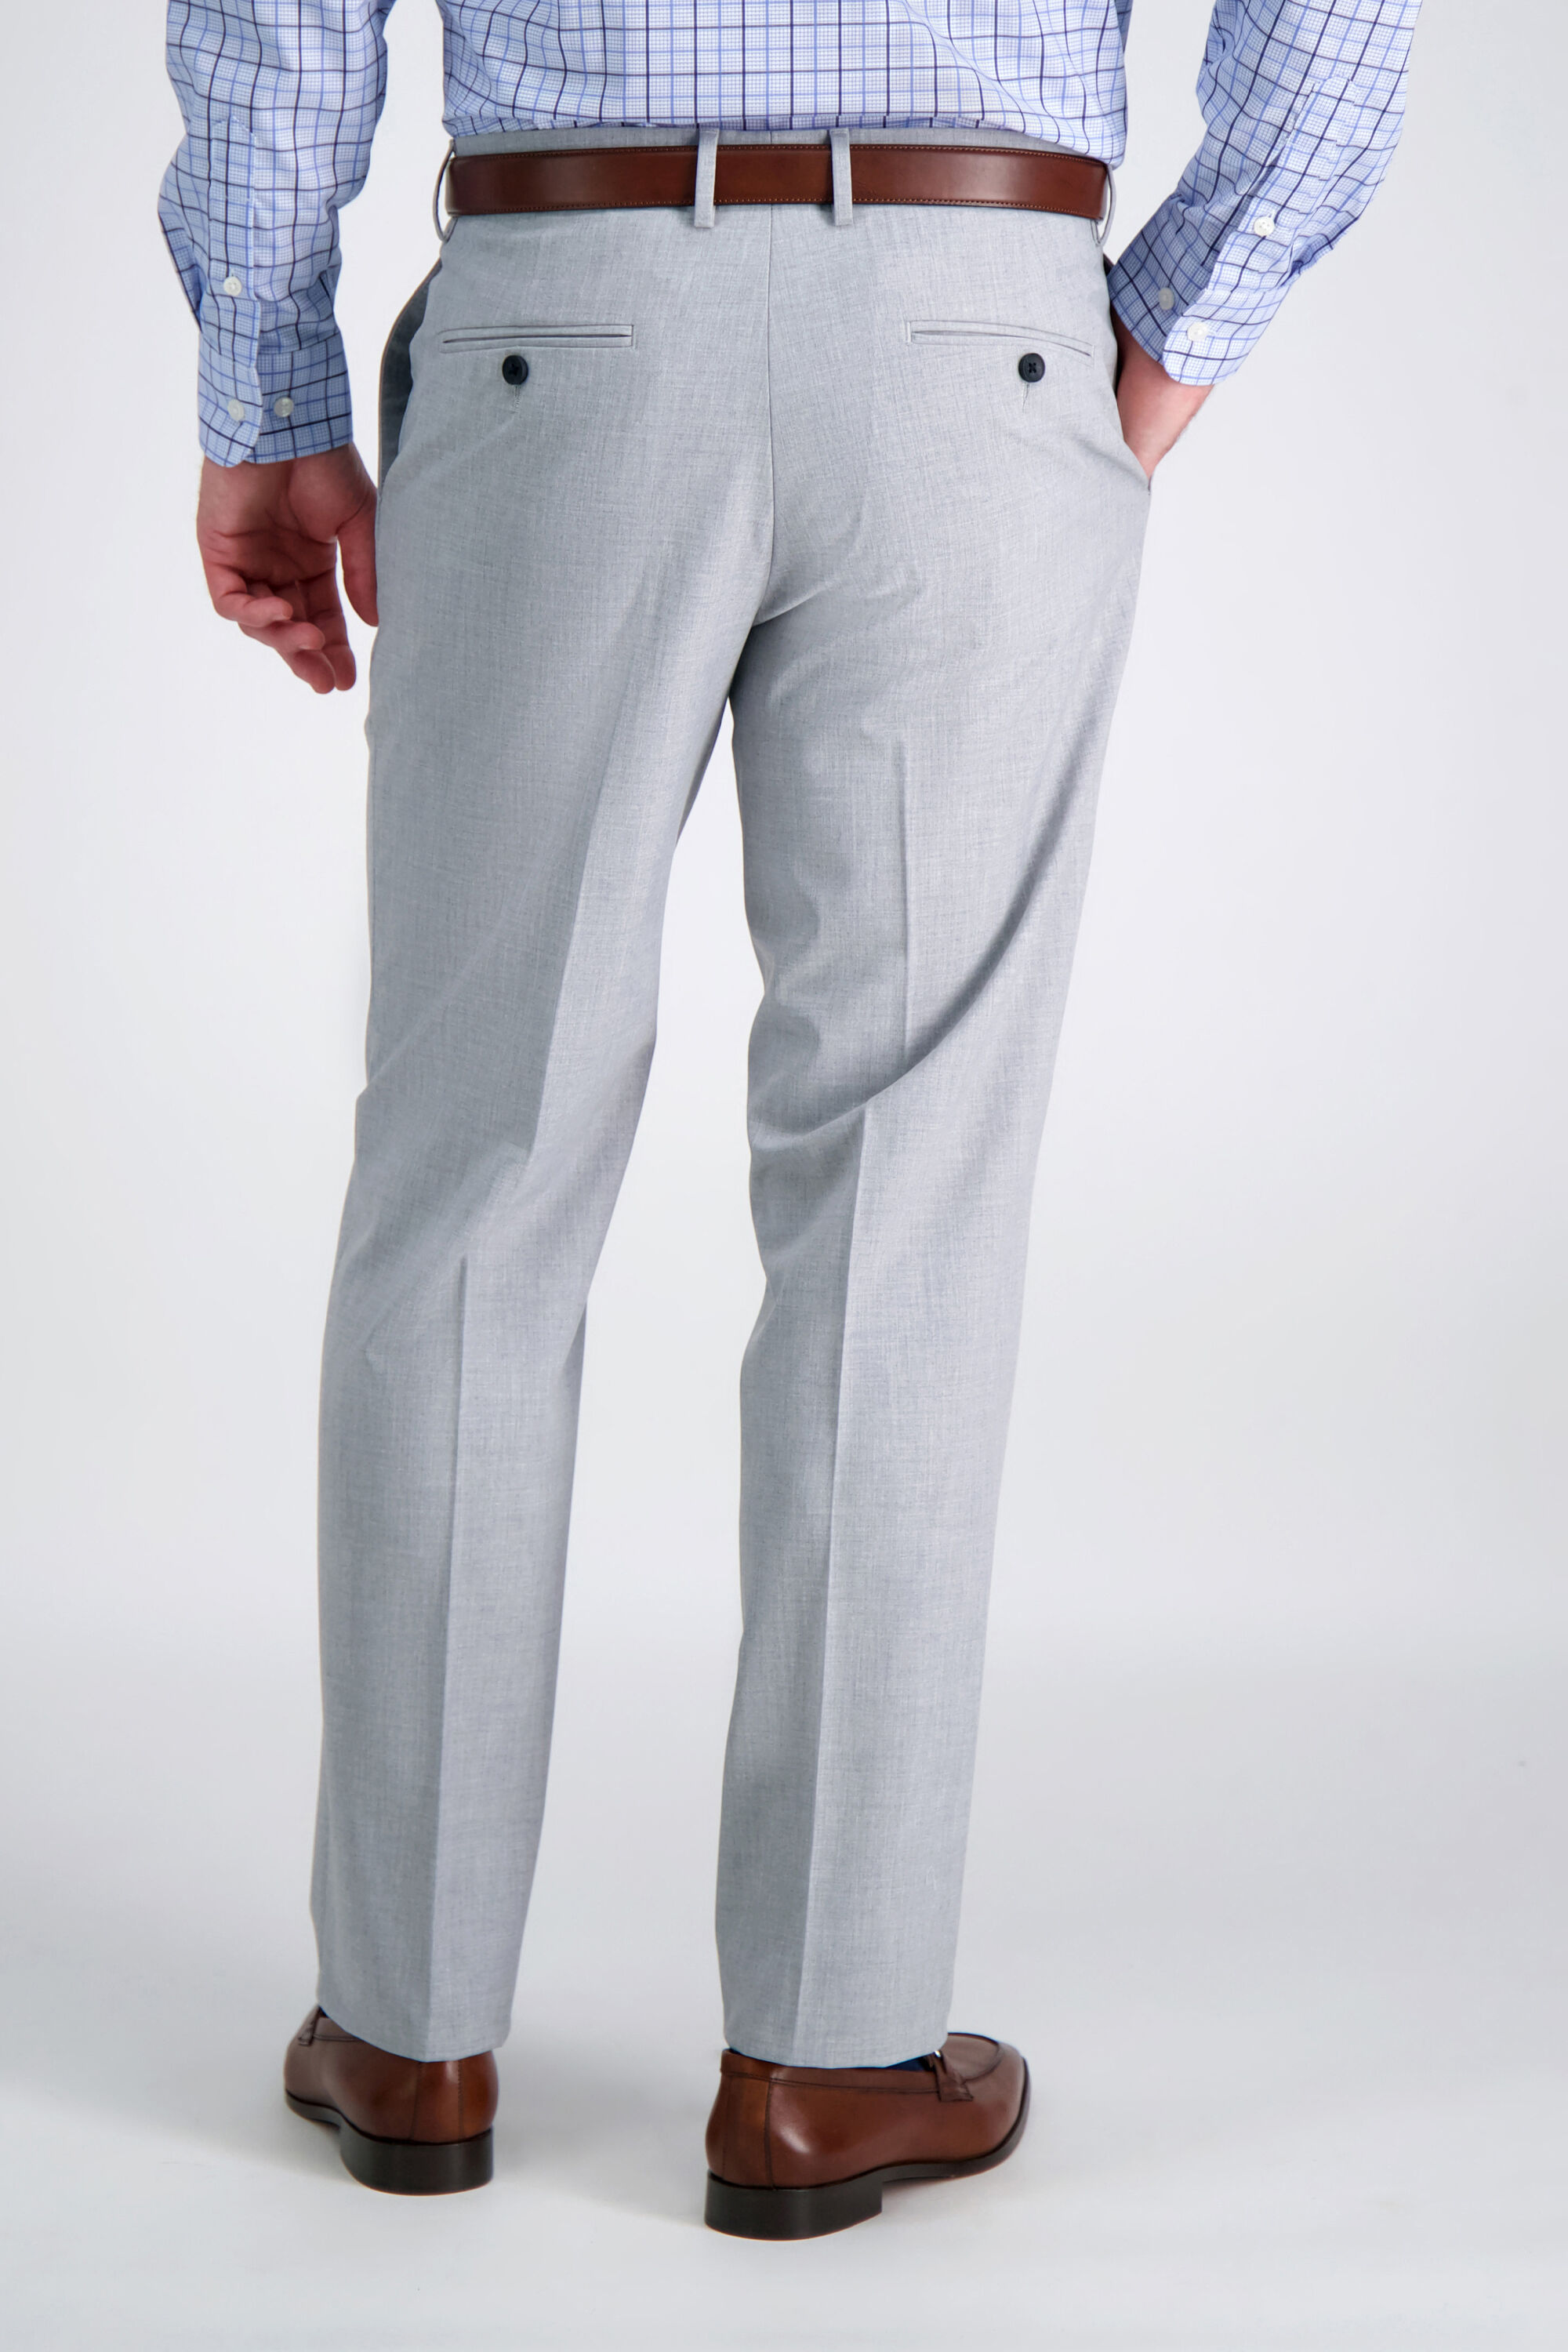 light grey dress pants